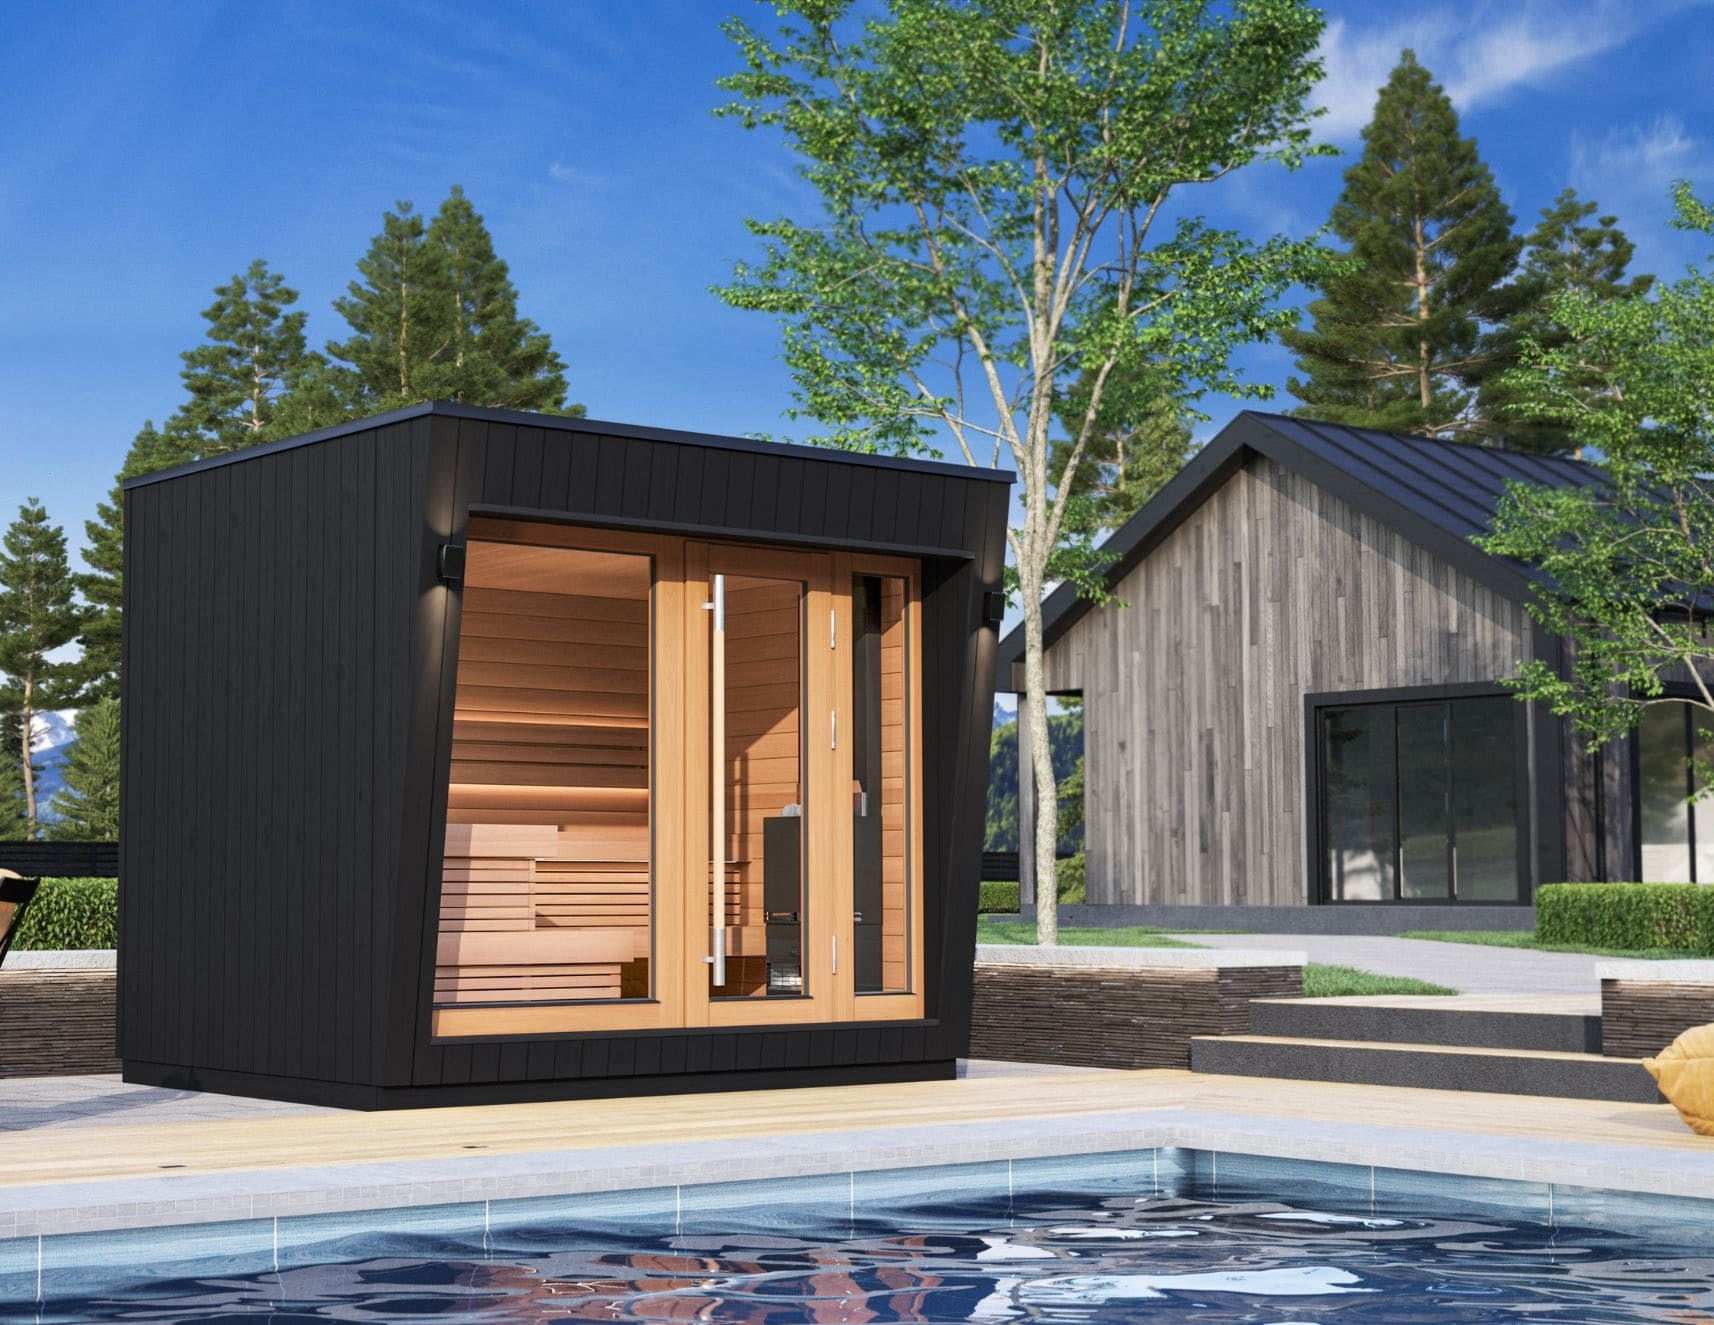 Saunum AirCube Space Outdoor Sauna 5 Seater - Heracles Wellness